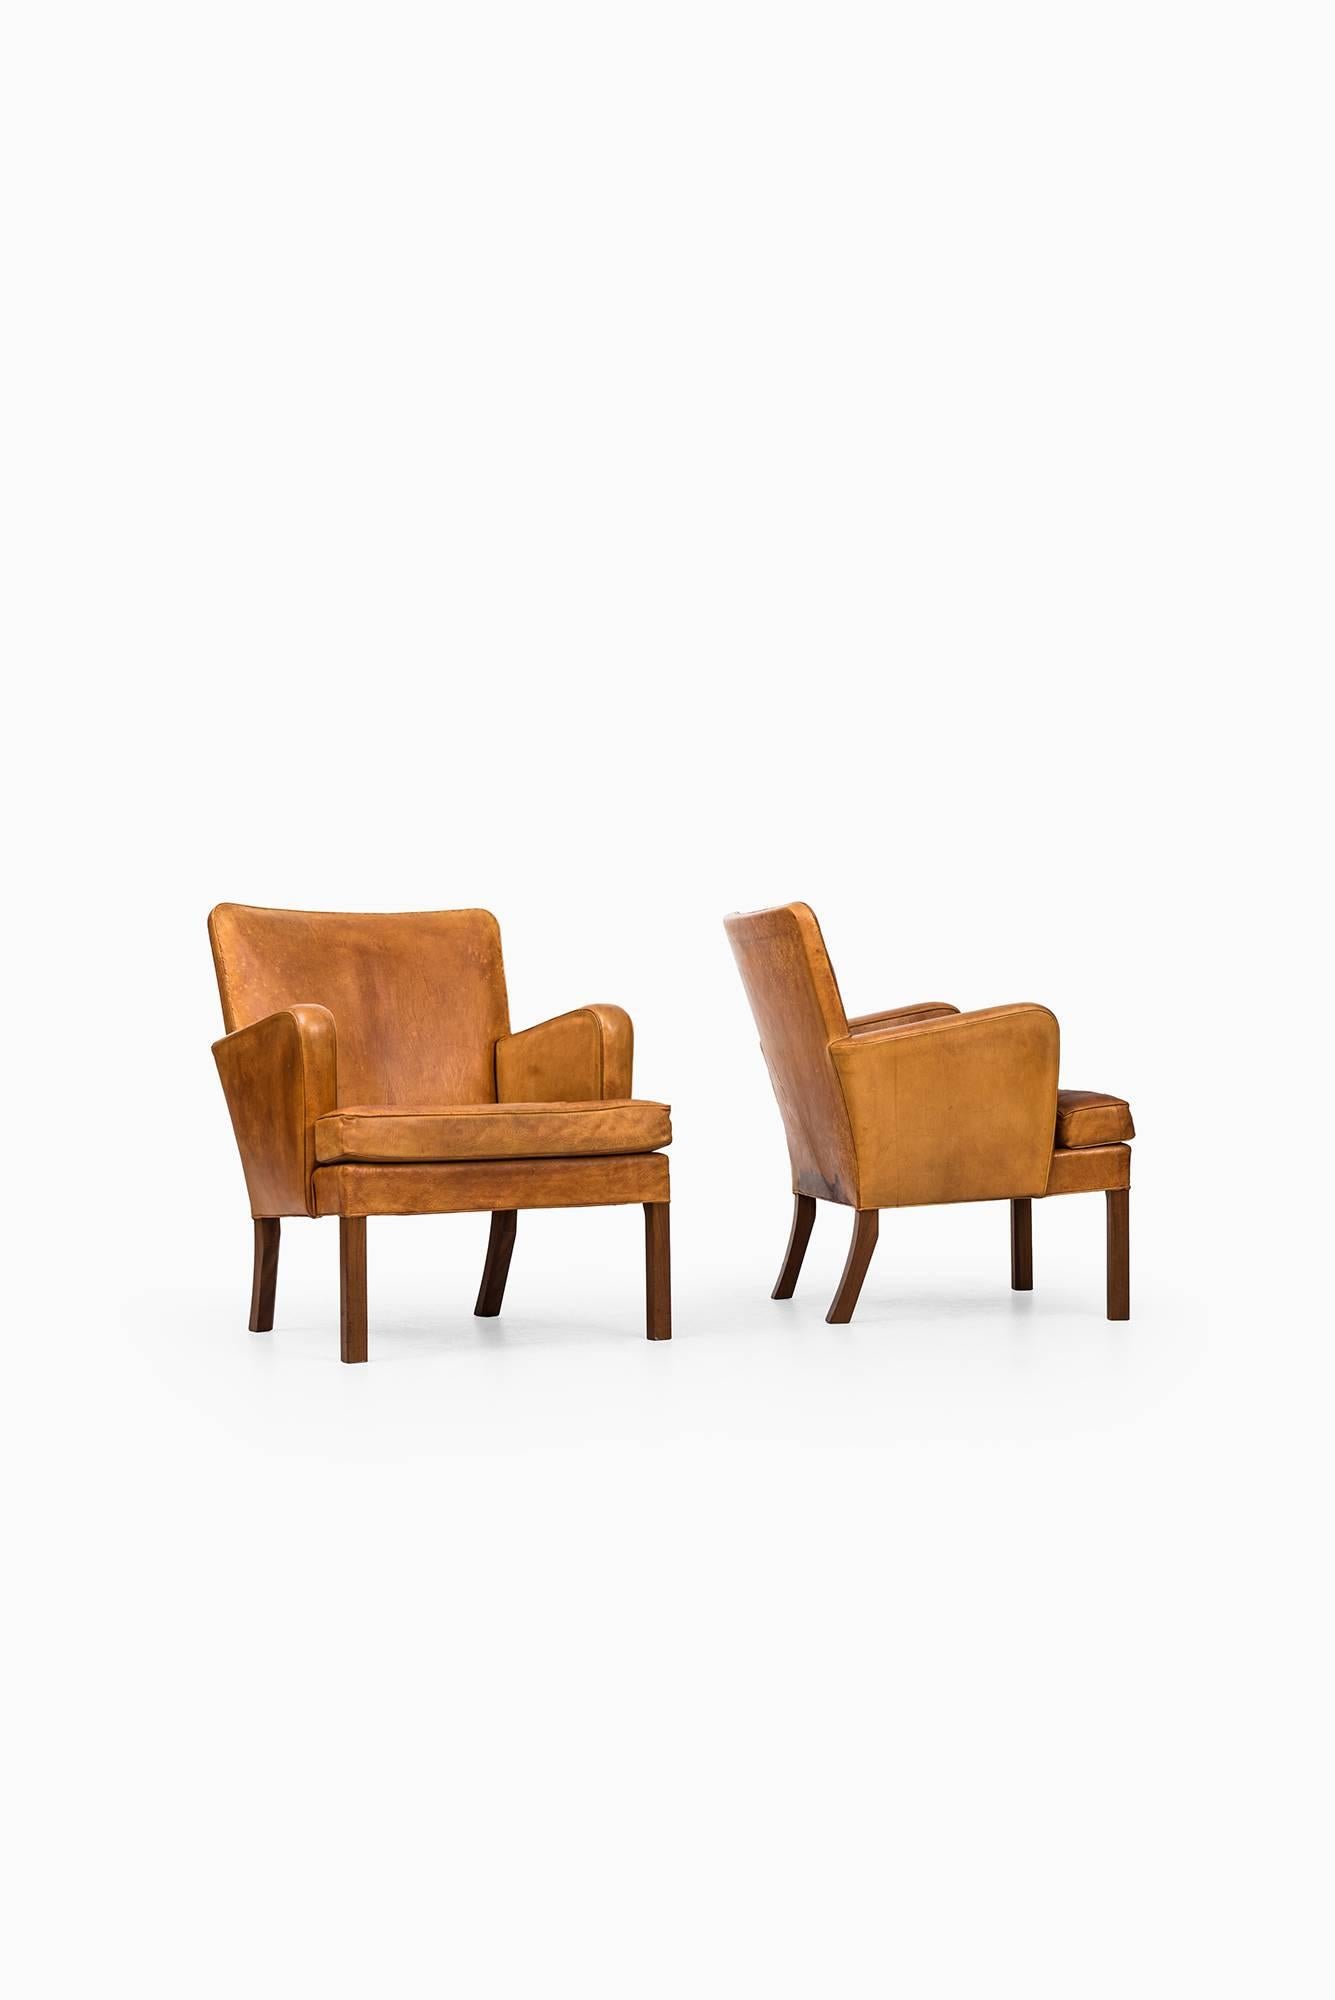 Danish Kaare Klint Easy Chairs Model 5313 by Rud. Rasmussen Cabinetmakers in Denmark